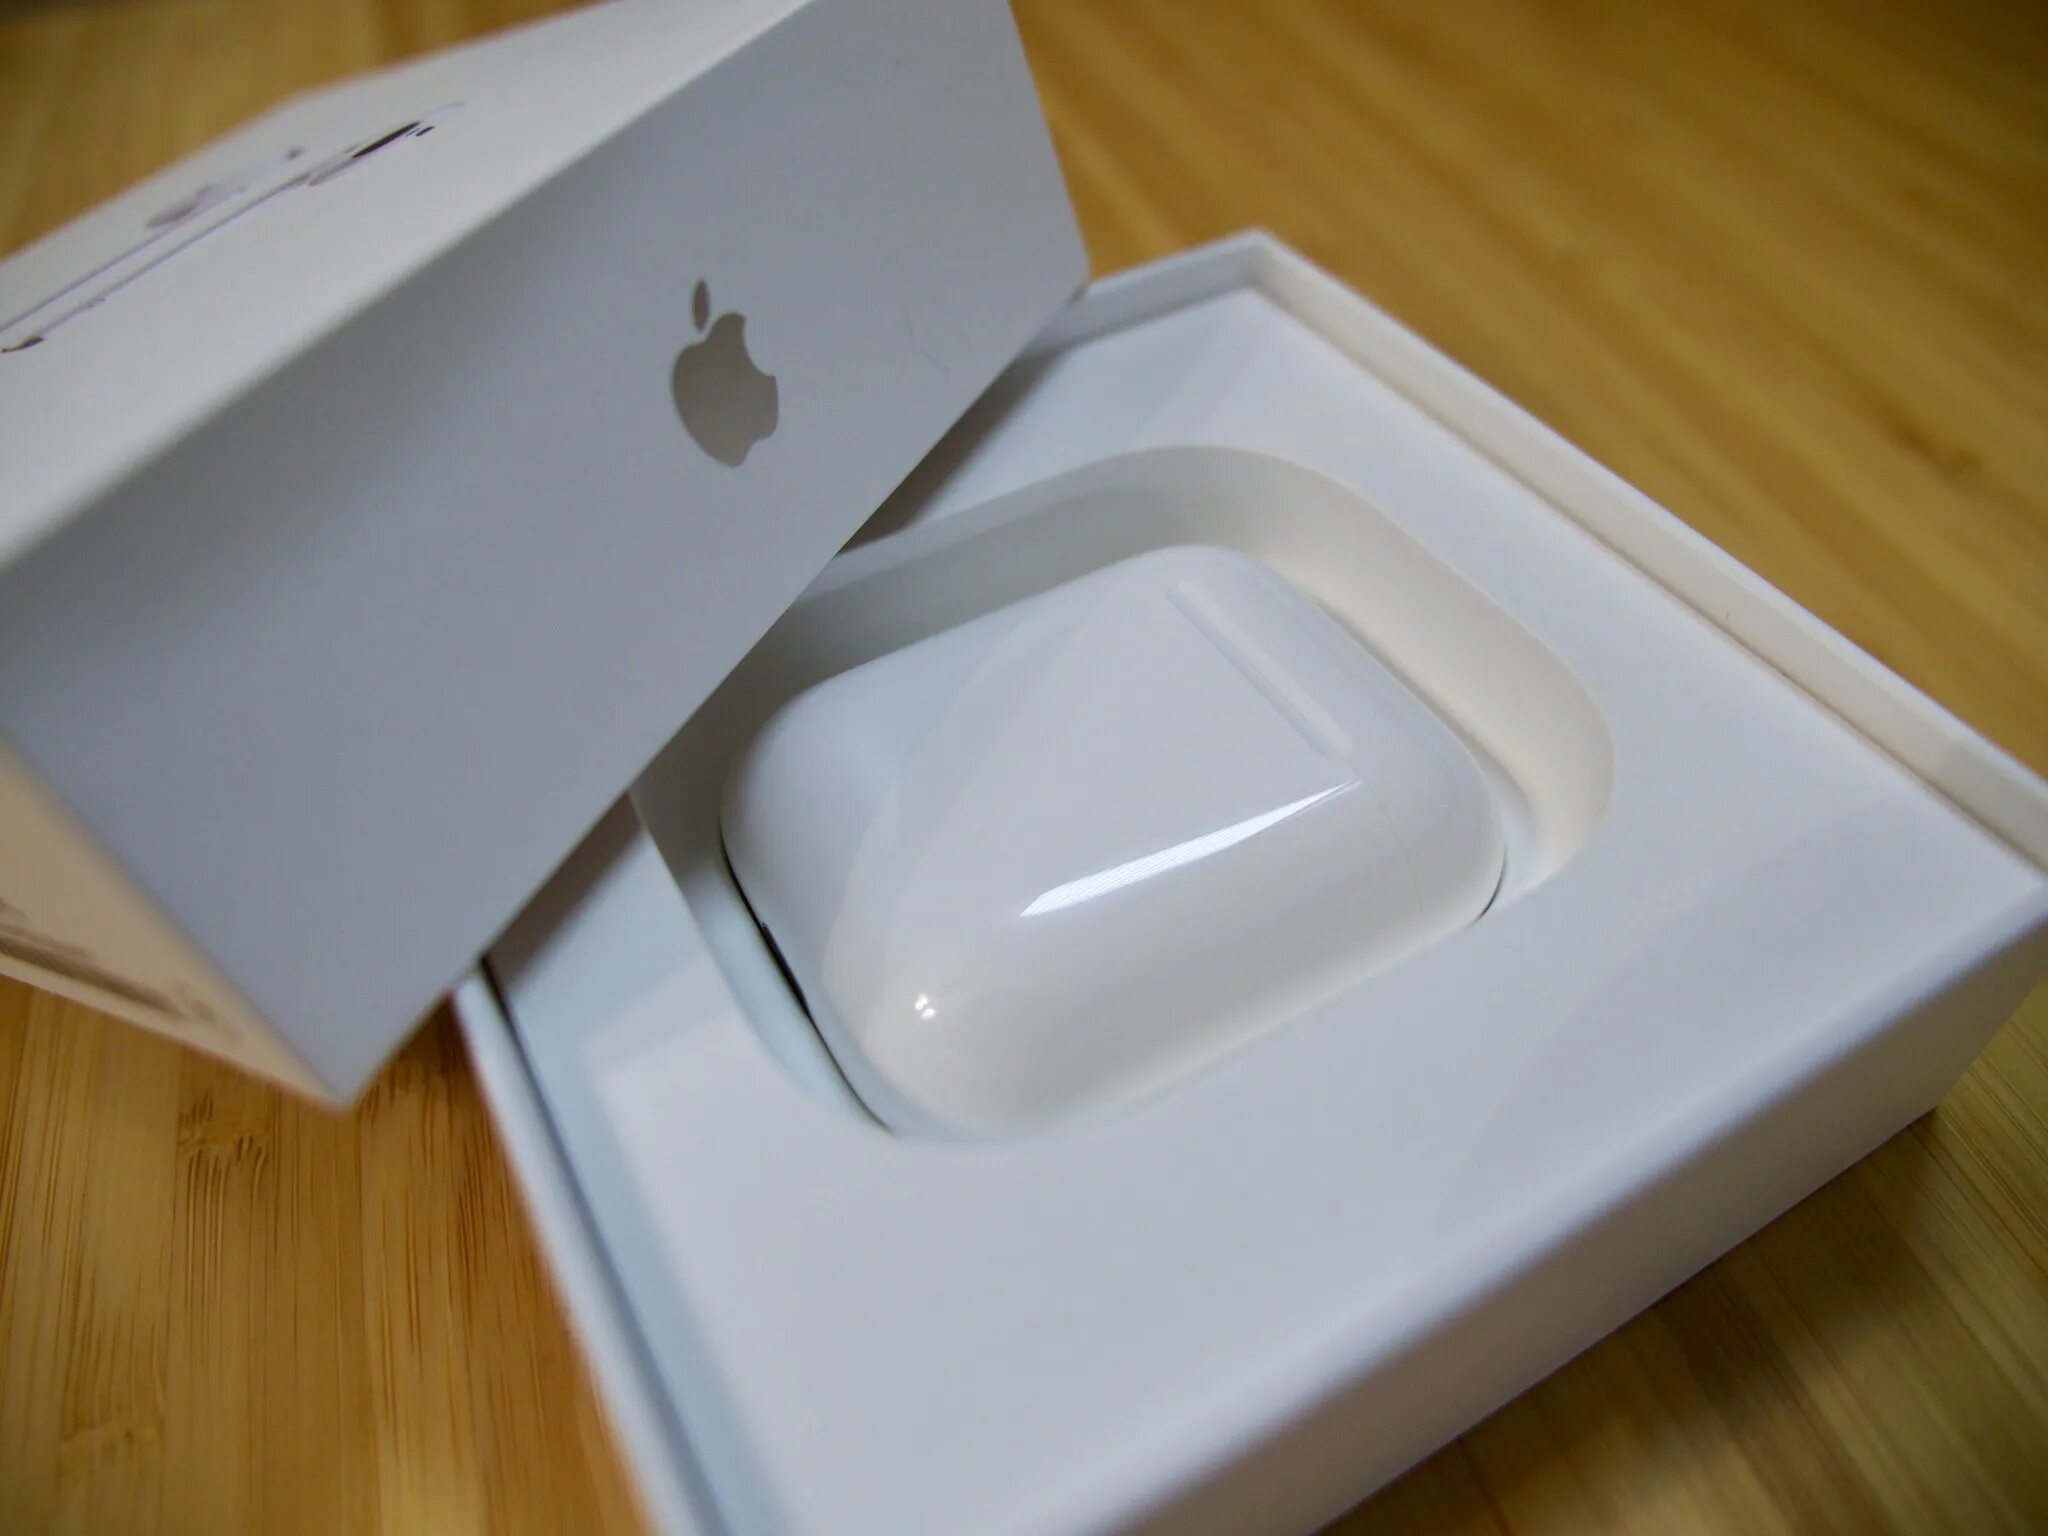 Apple AIRPODS 2 коробка. Apple AIRPODS Pro 2 коробка. Аирподсы эпл. Apple аирподс коробка. Наушники airpods коробка